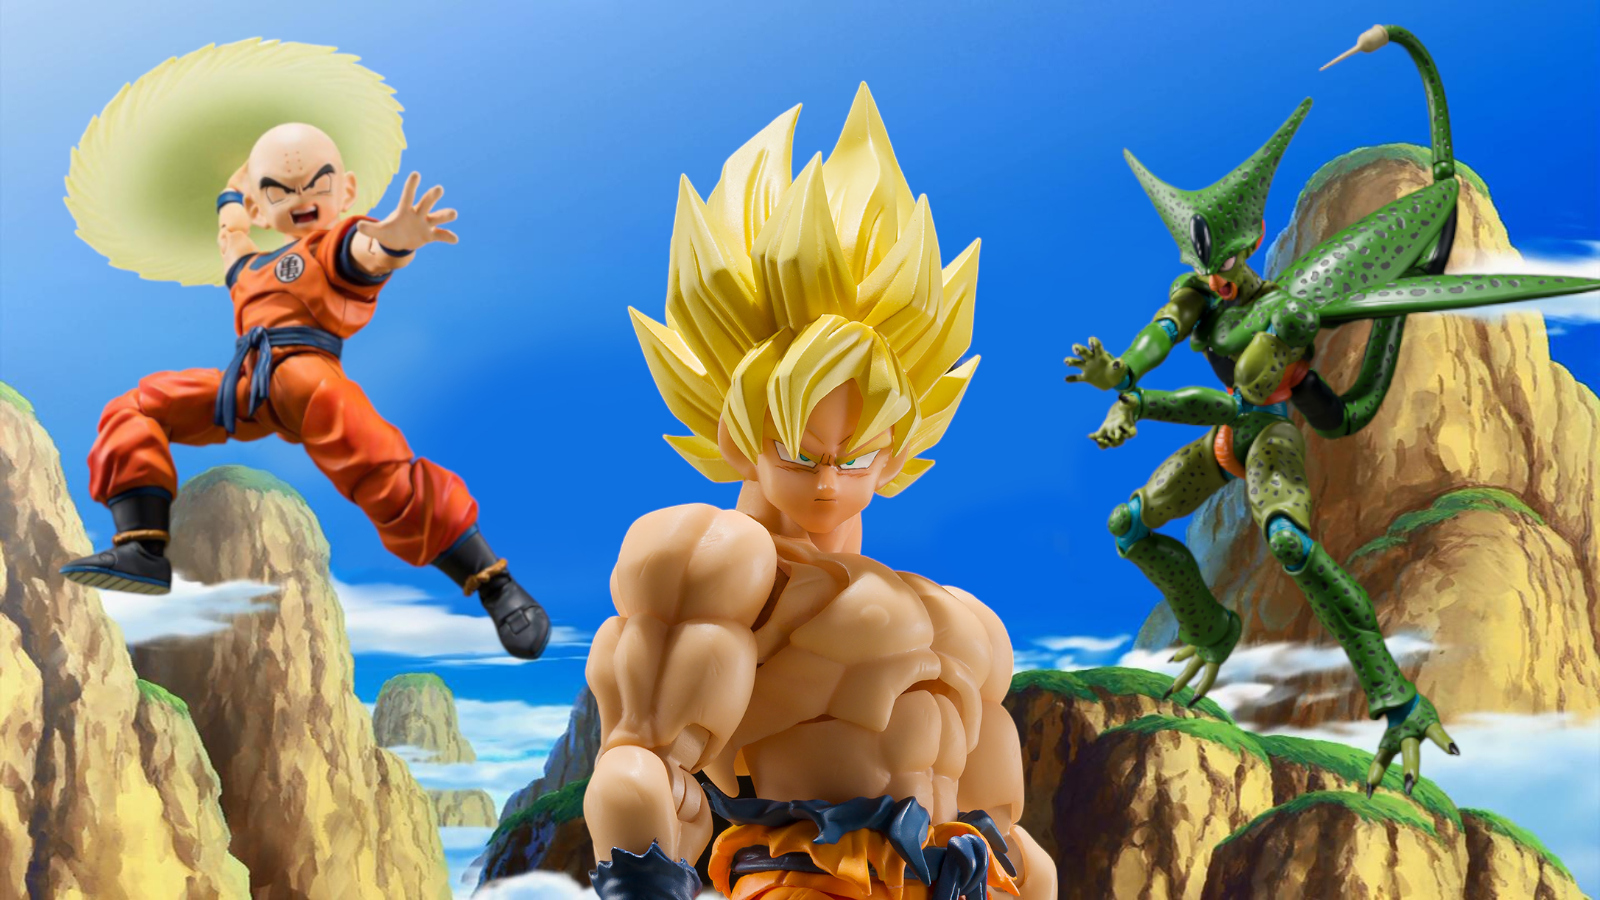 Dragon Ball - Figurine Goku Super Saiyan